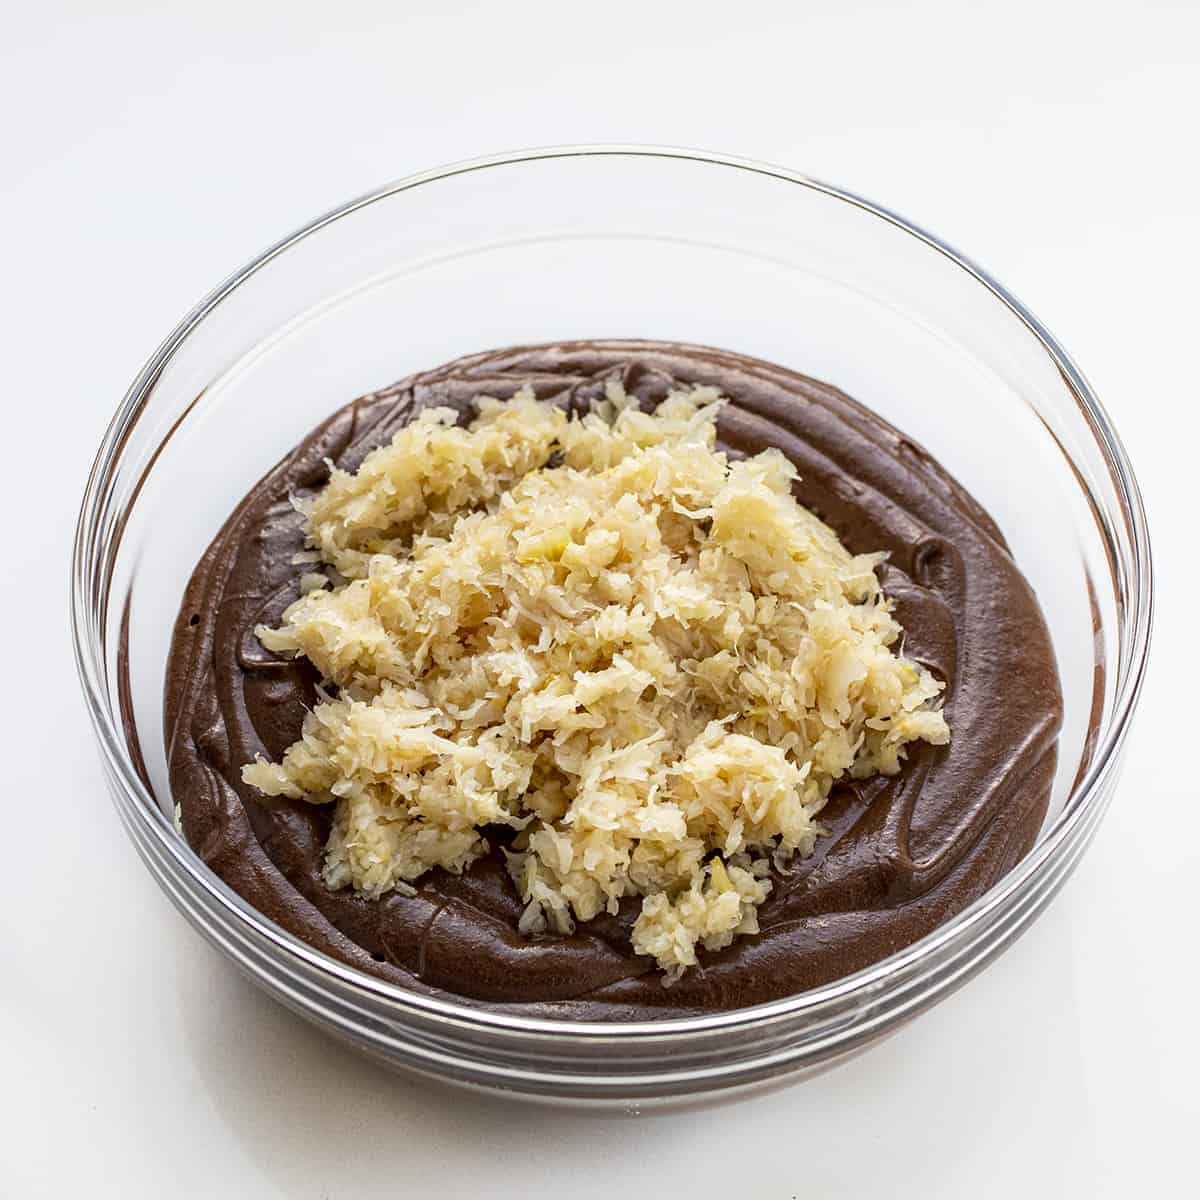 Raw Chocolate Cake Batter with Sauerkraut In it Before Stirring.